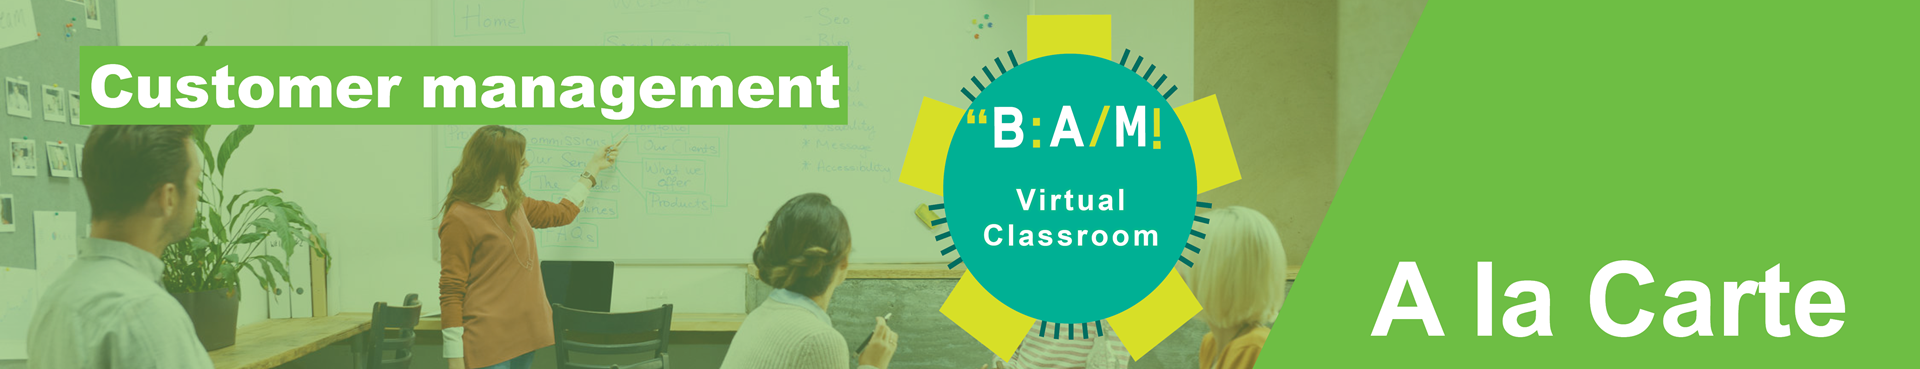 Customer management_virtual classroom